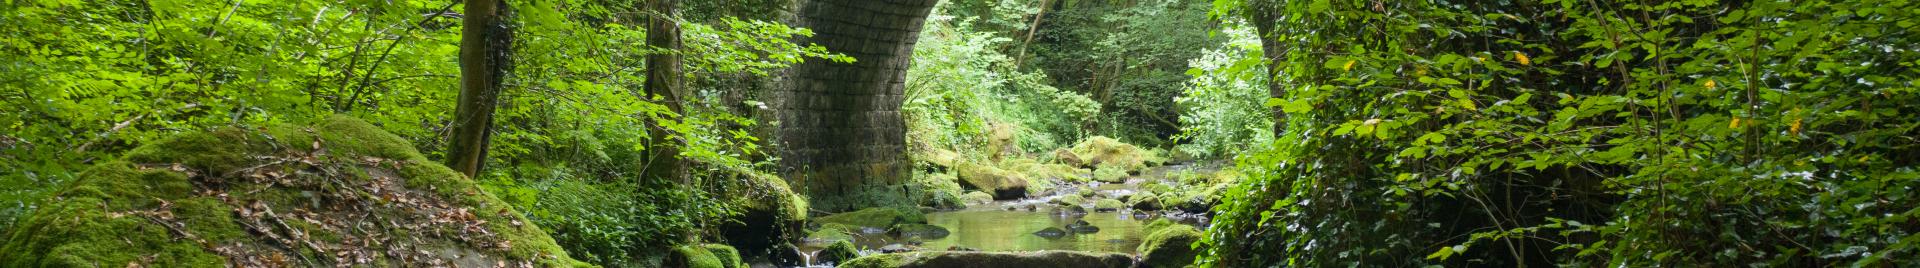 Image of stone bridge over small stream in woodland